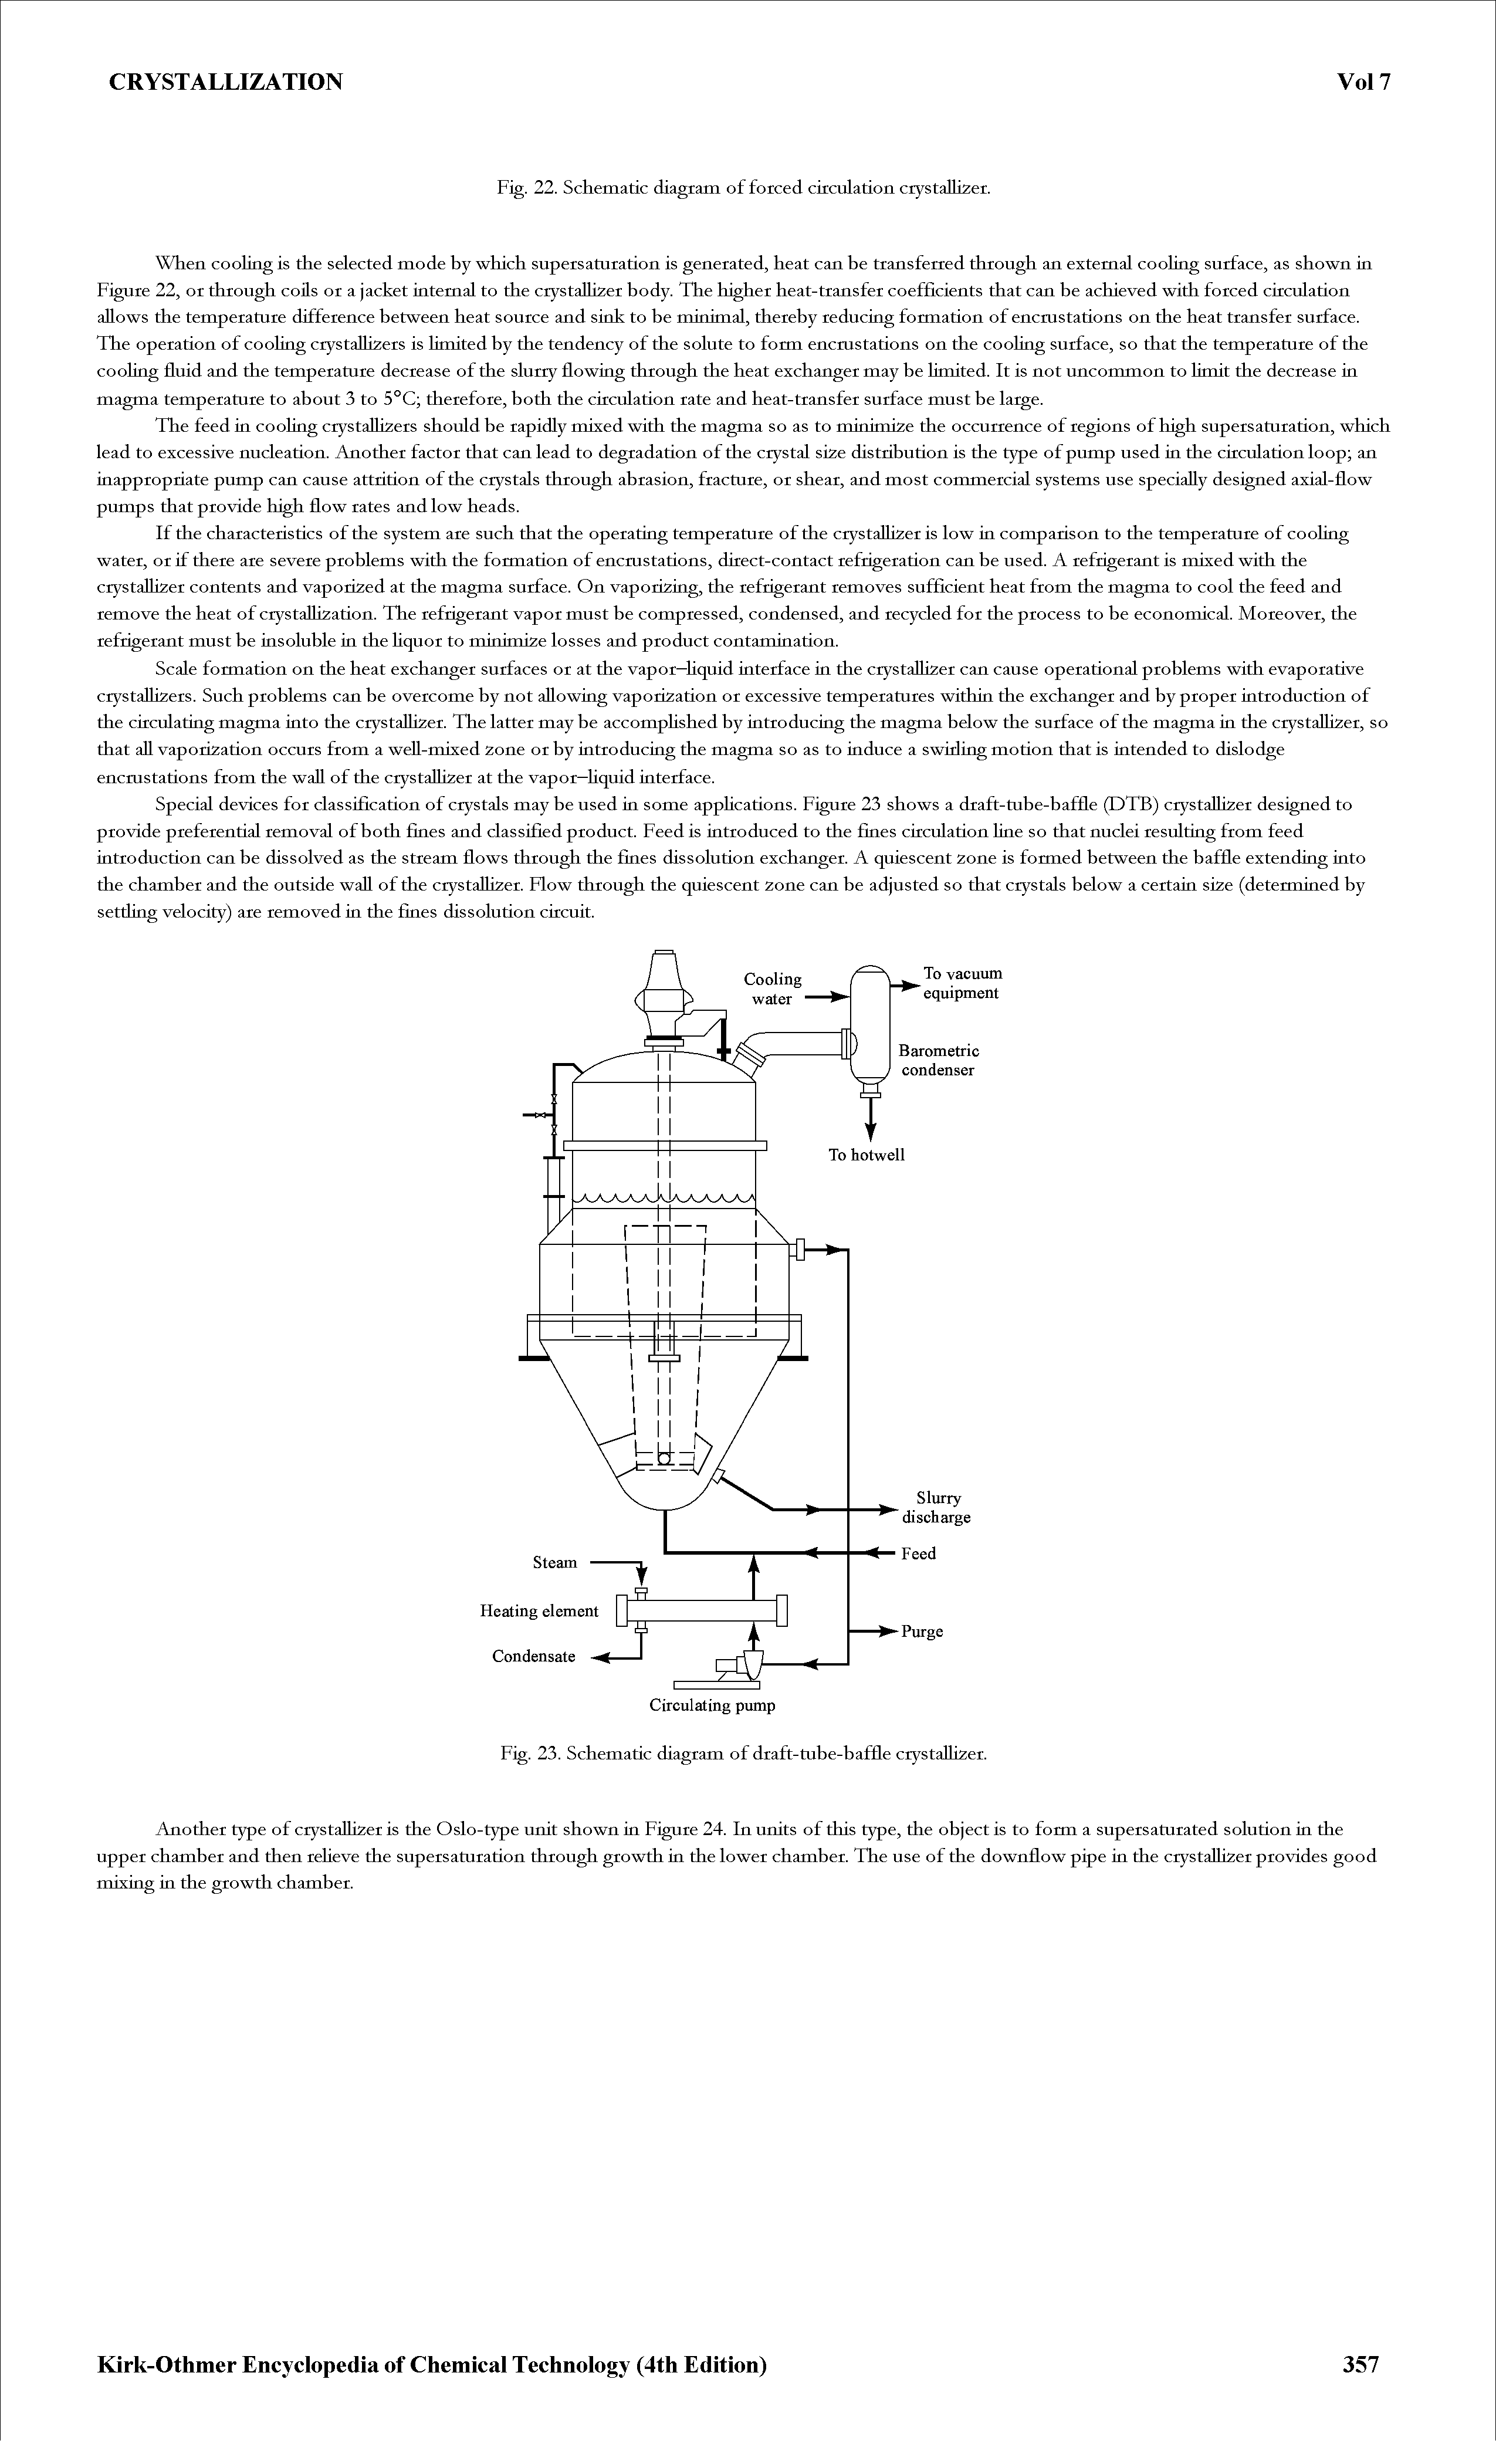 Fig. 23. Schematic diagram of draft-tube-baffle crystallizer.